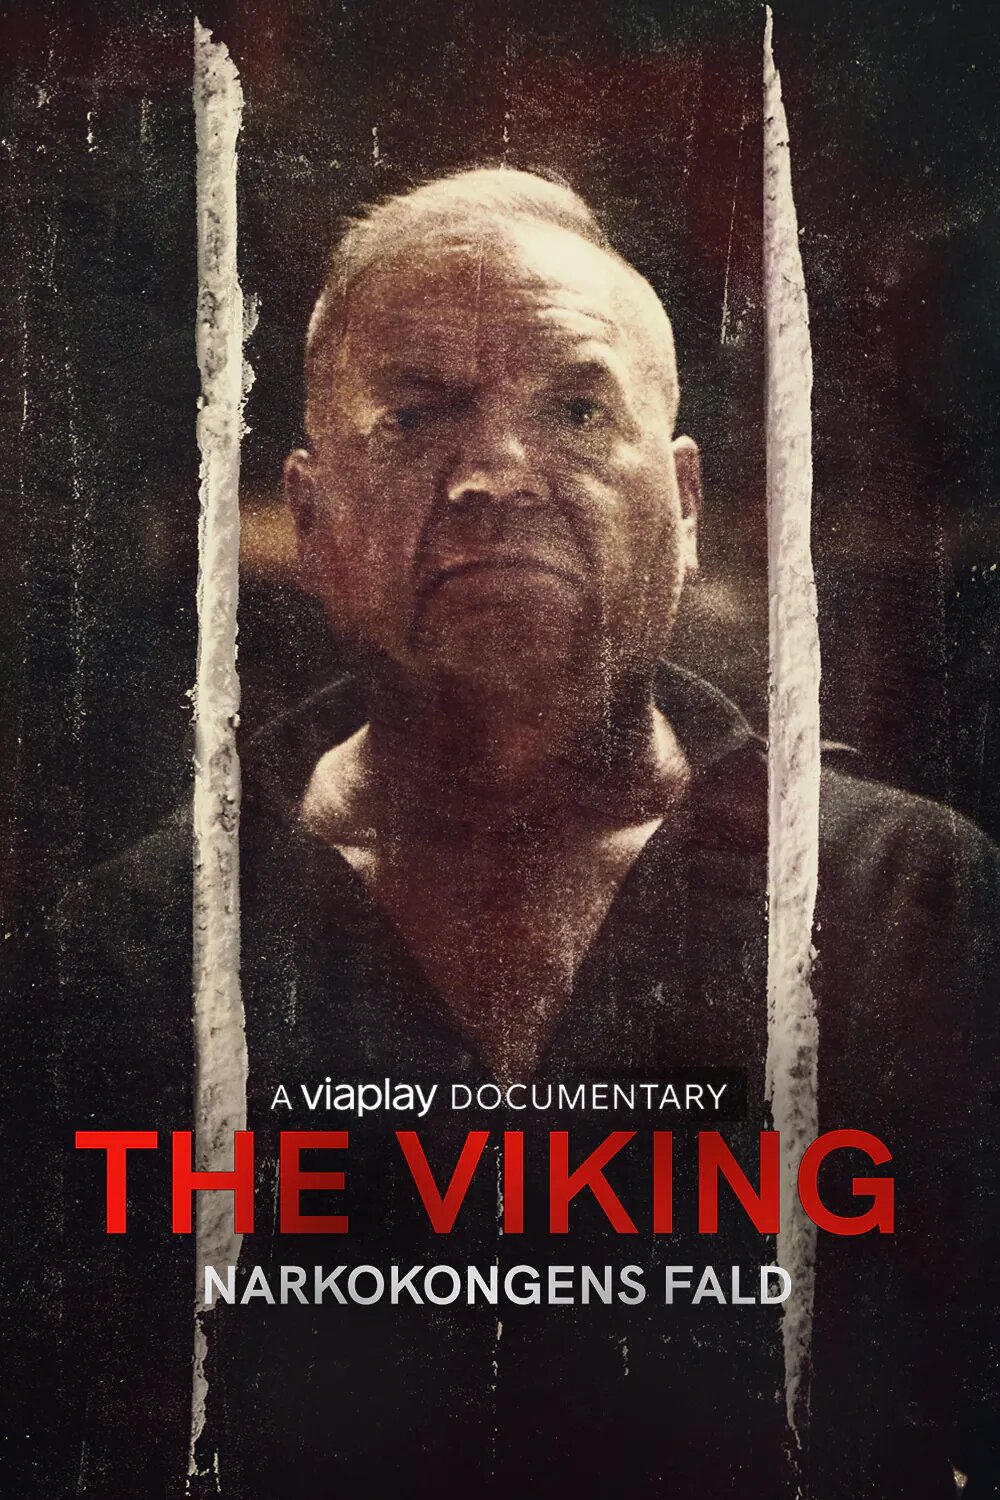 The Viking - Narkokongens Fald ne zaman